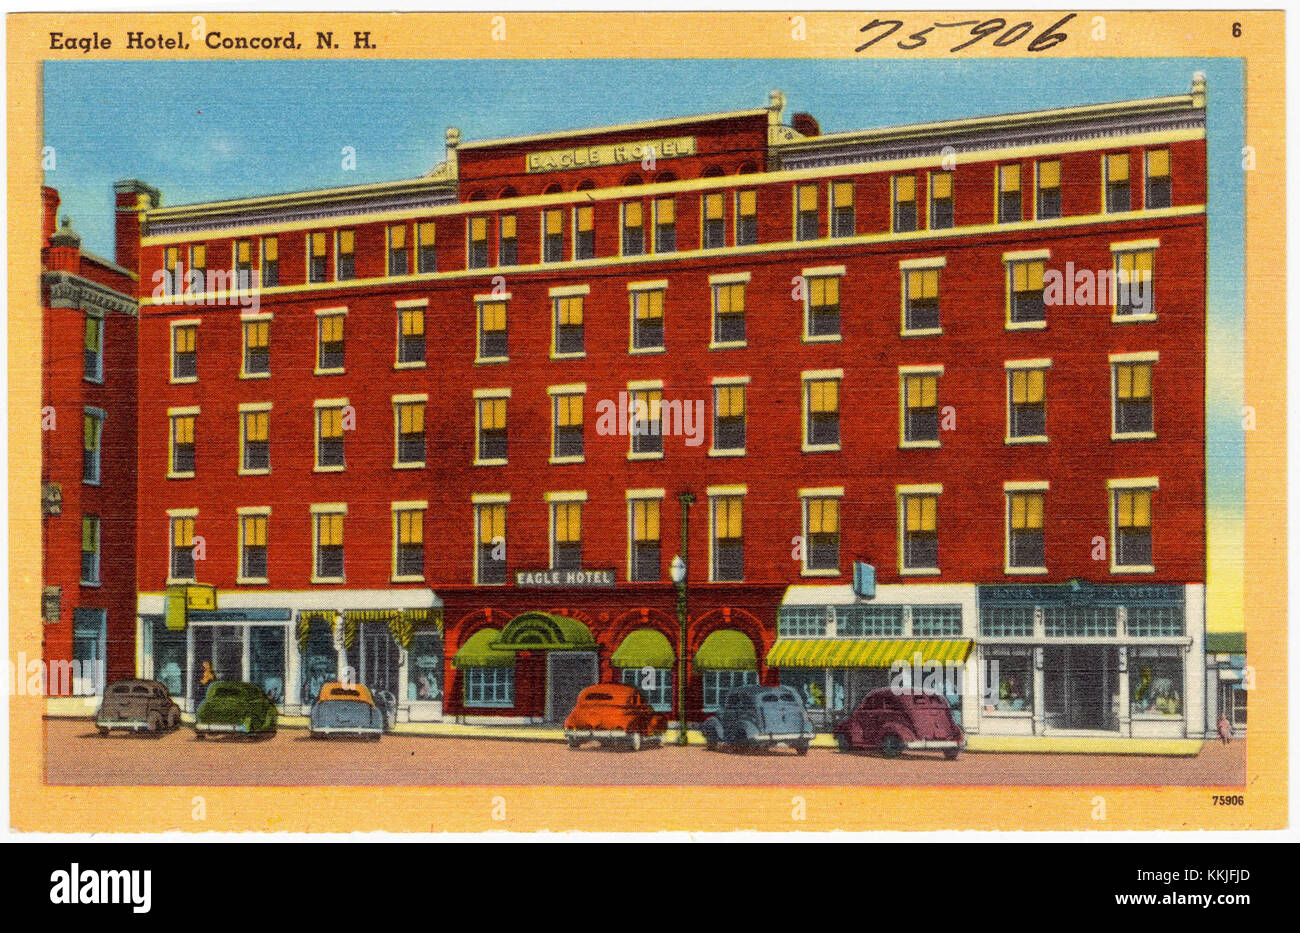 Eagle Hotel, Concord, N.H (75906) Foto Stock